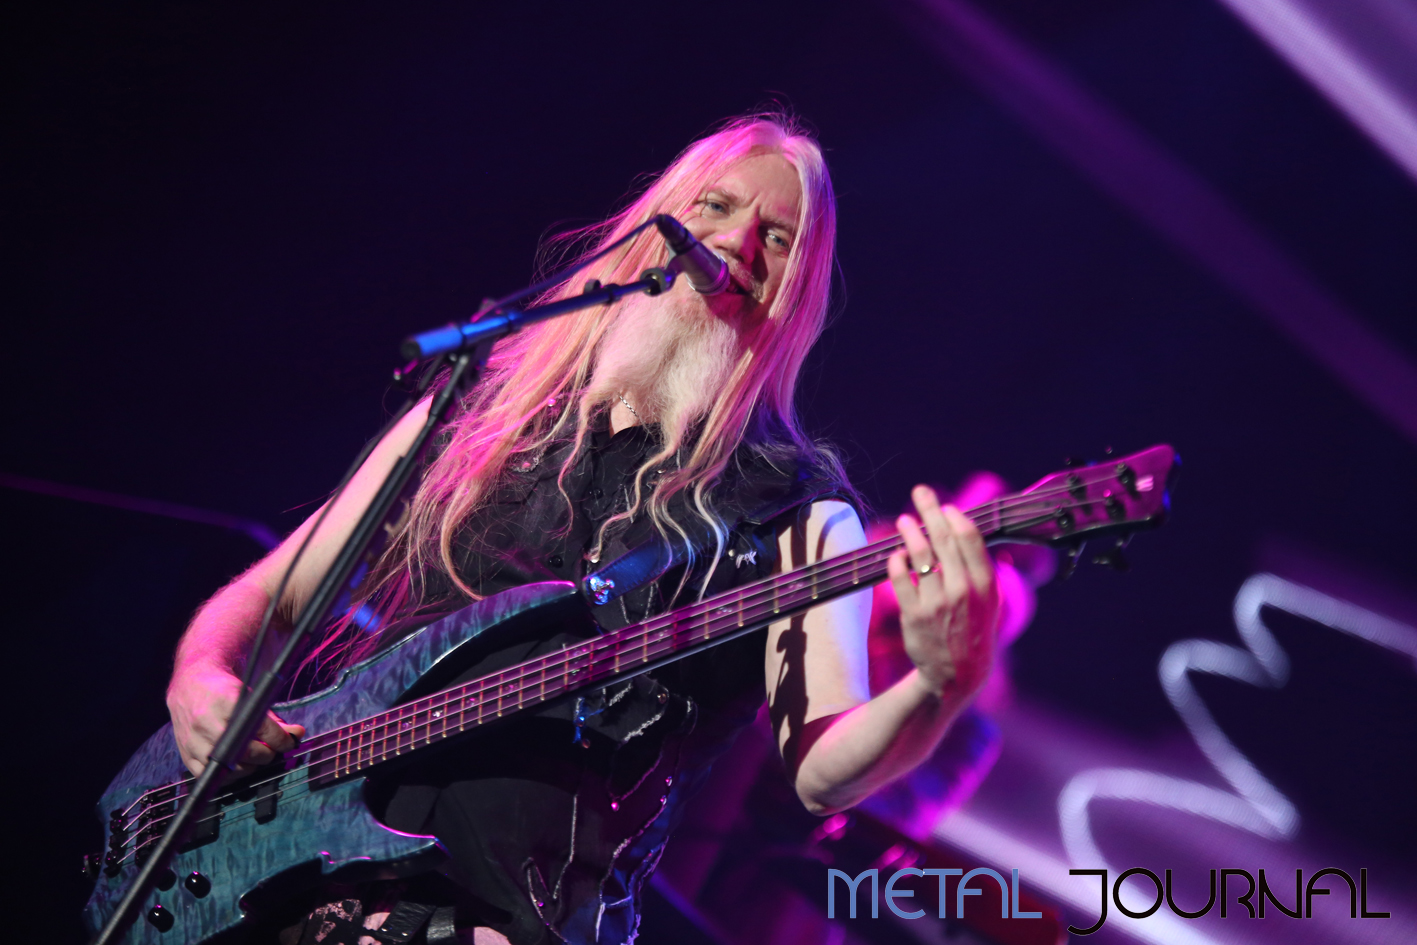 Nightwish member Marco Hitala, winner of the “Masked Singer” show in Finland